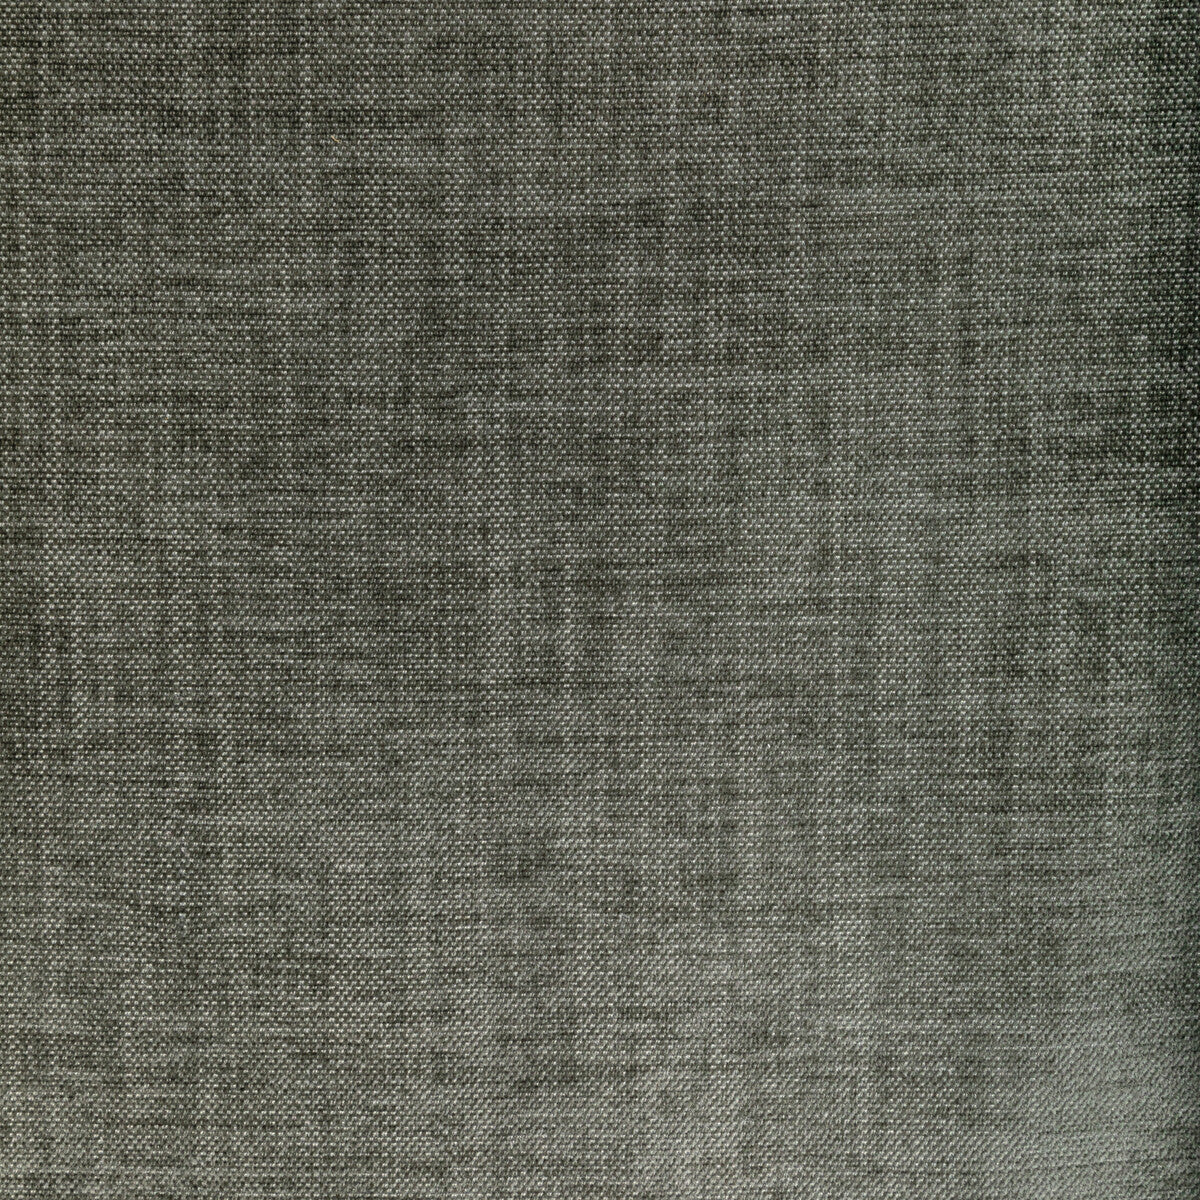 Kravet Smart fabric in 36650-1121 color - pattern 36650.1121.0 - by Kravet Smart in the Performance Kravetarmor collection